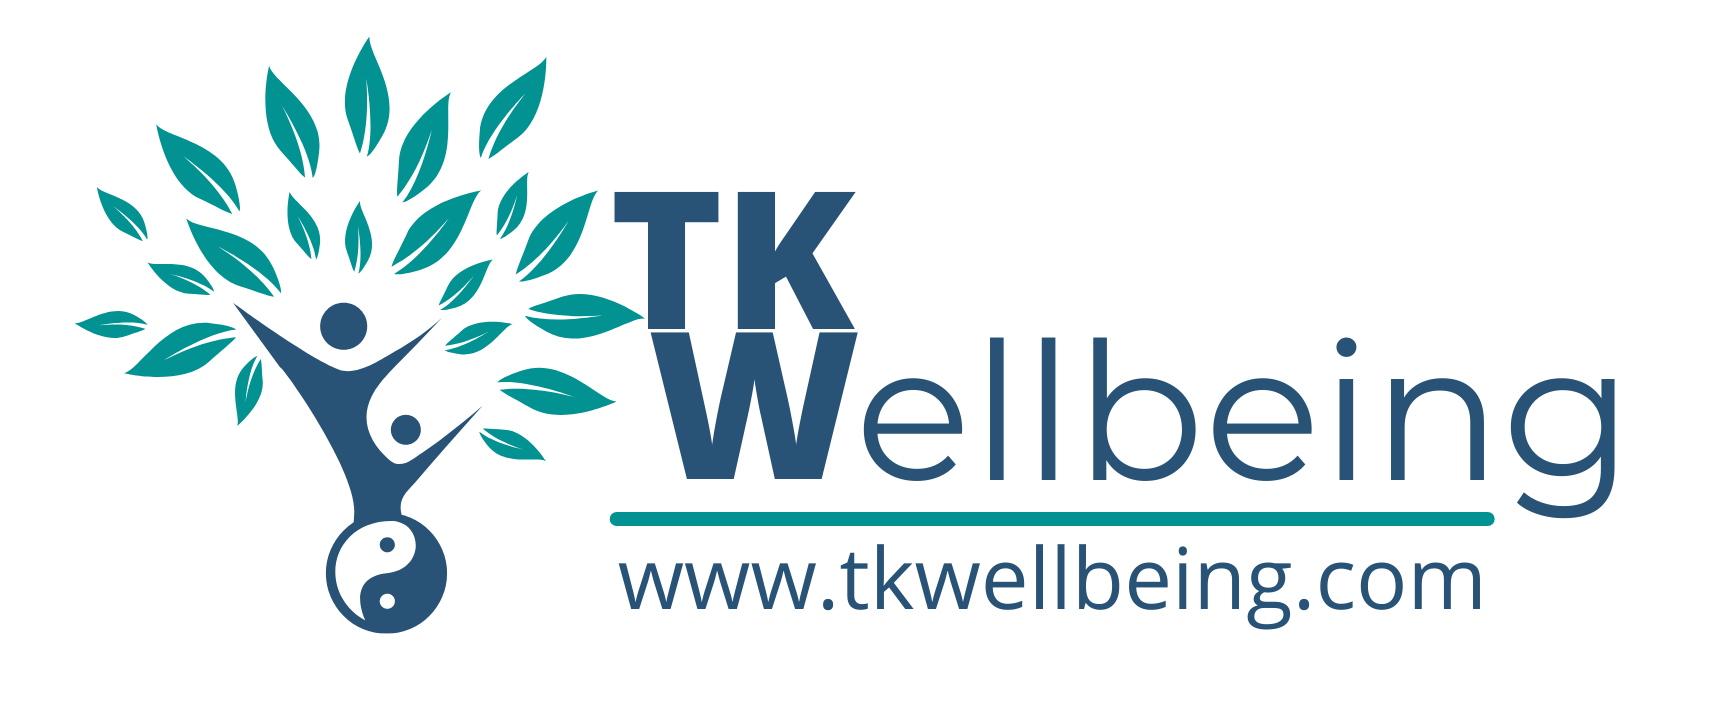 TK Wellbeing - tkwellbeing.com